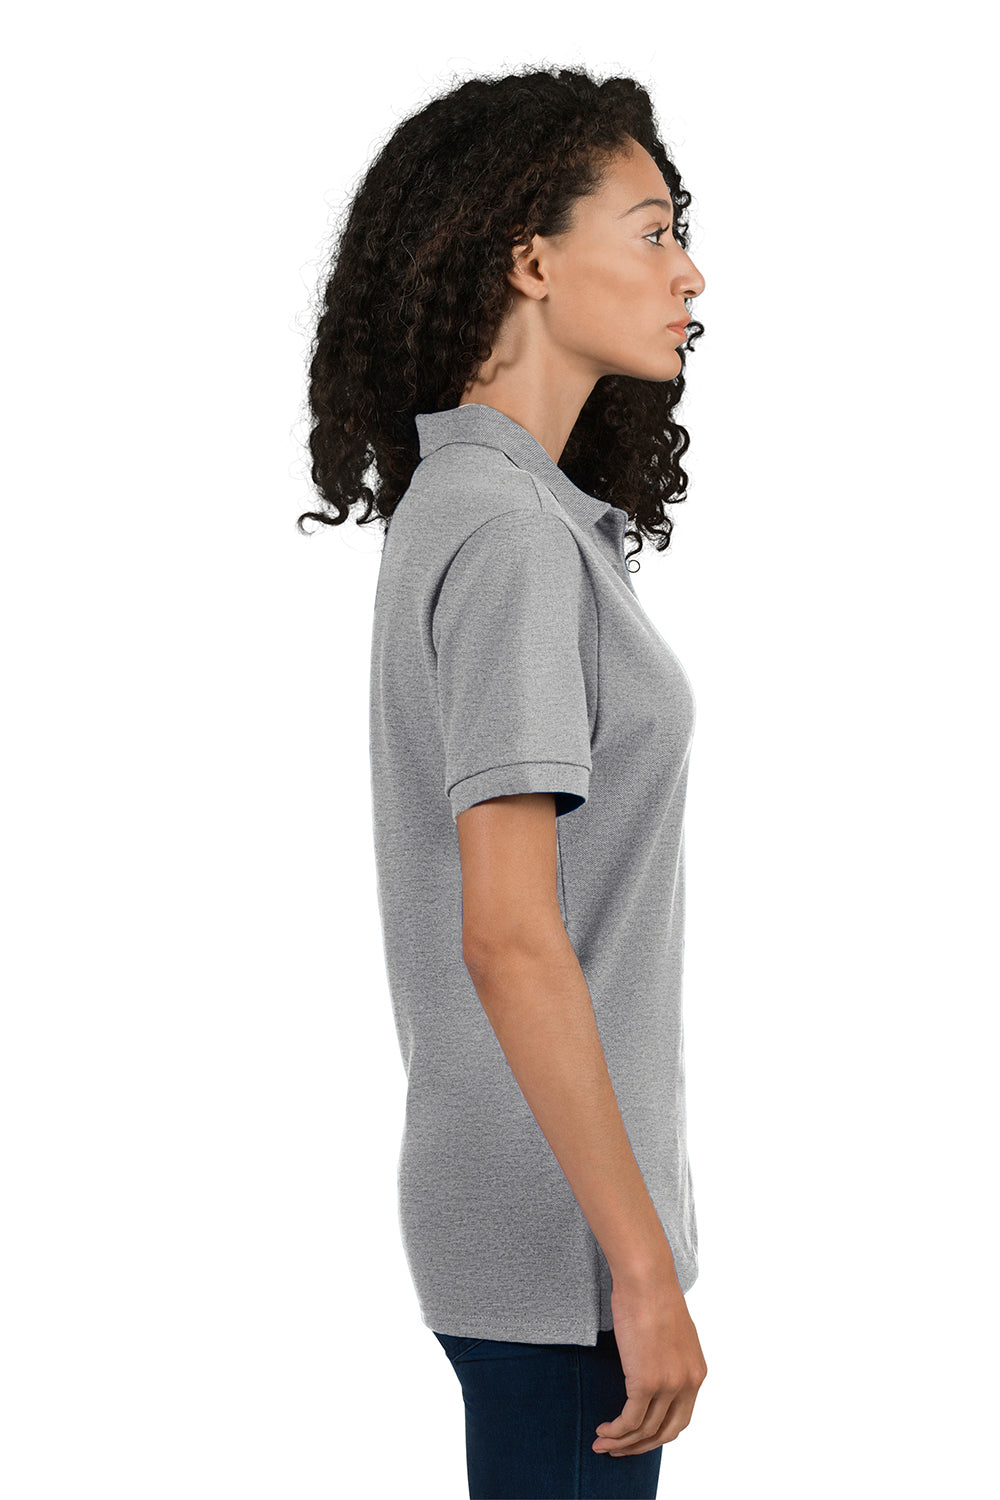 Jerzees 443WR Womens Short Sleeve Polo Shirt Heather Grey Side